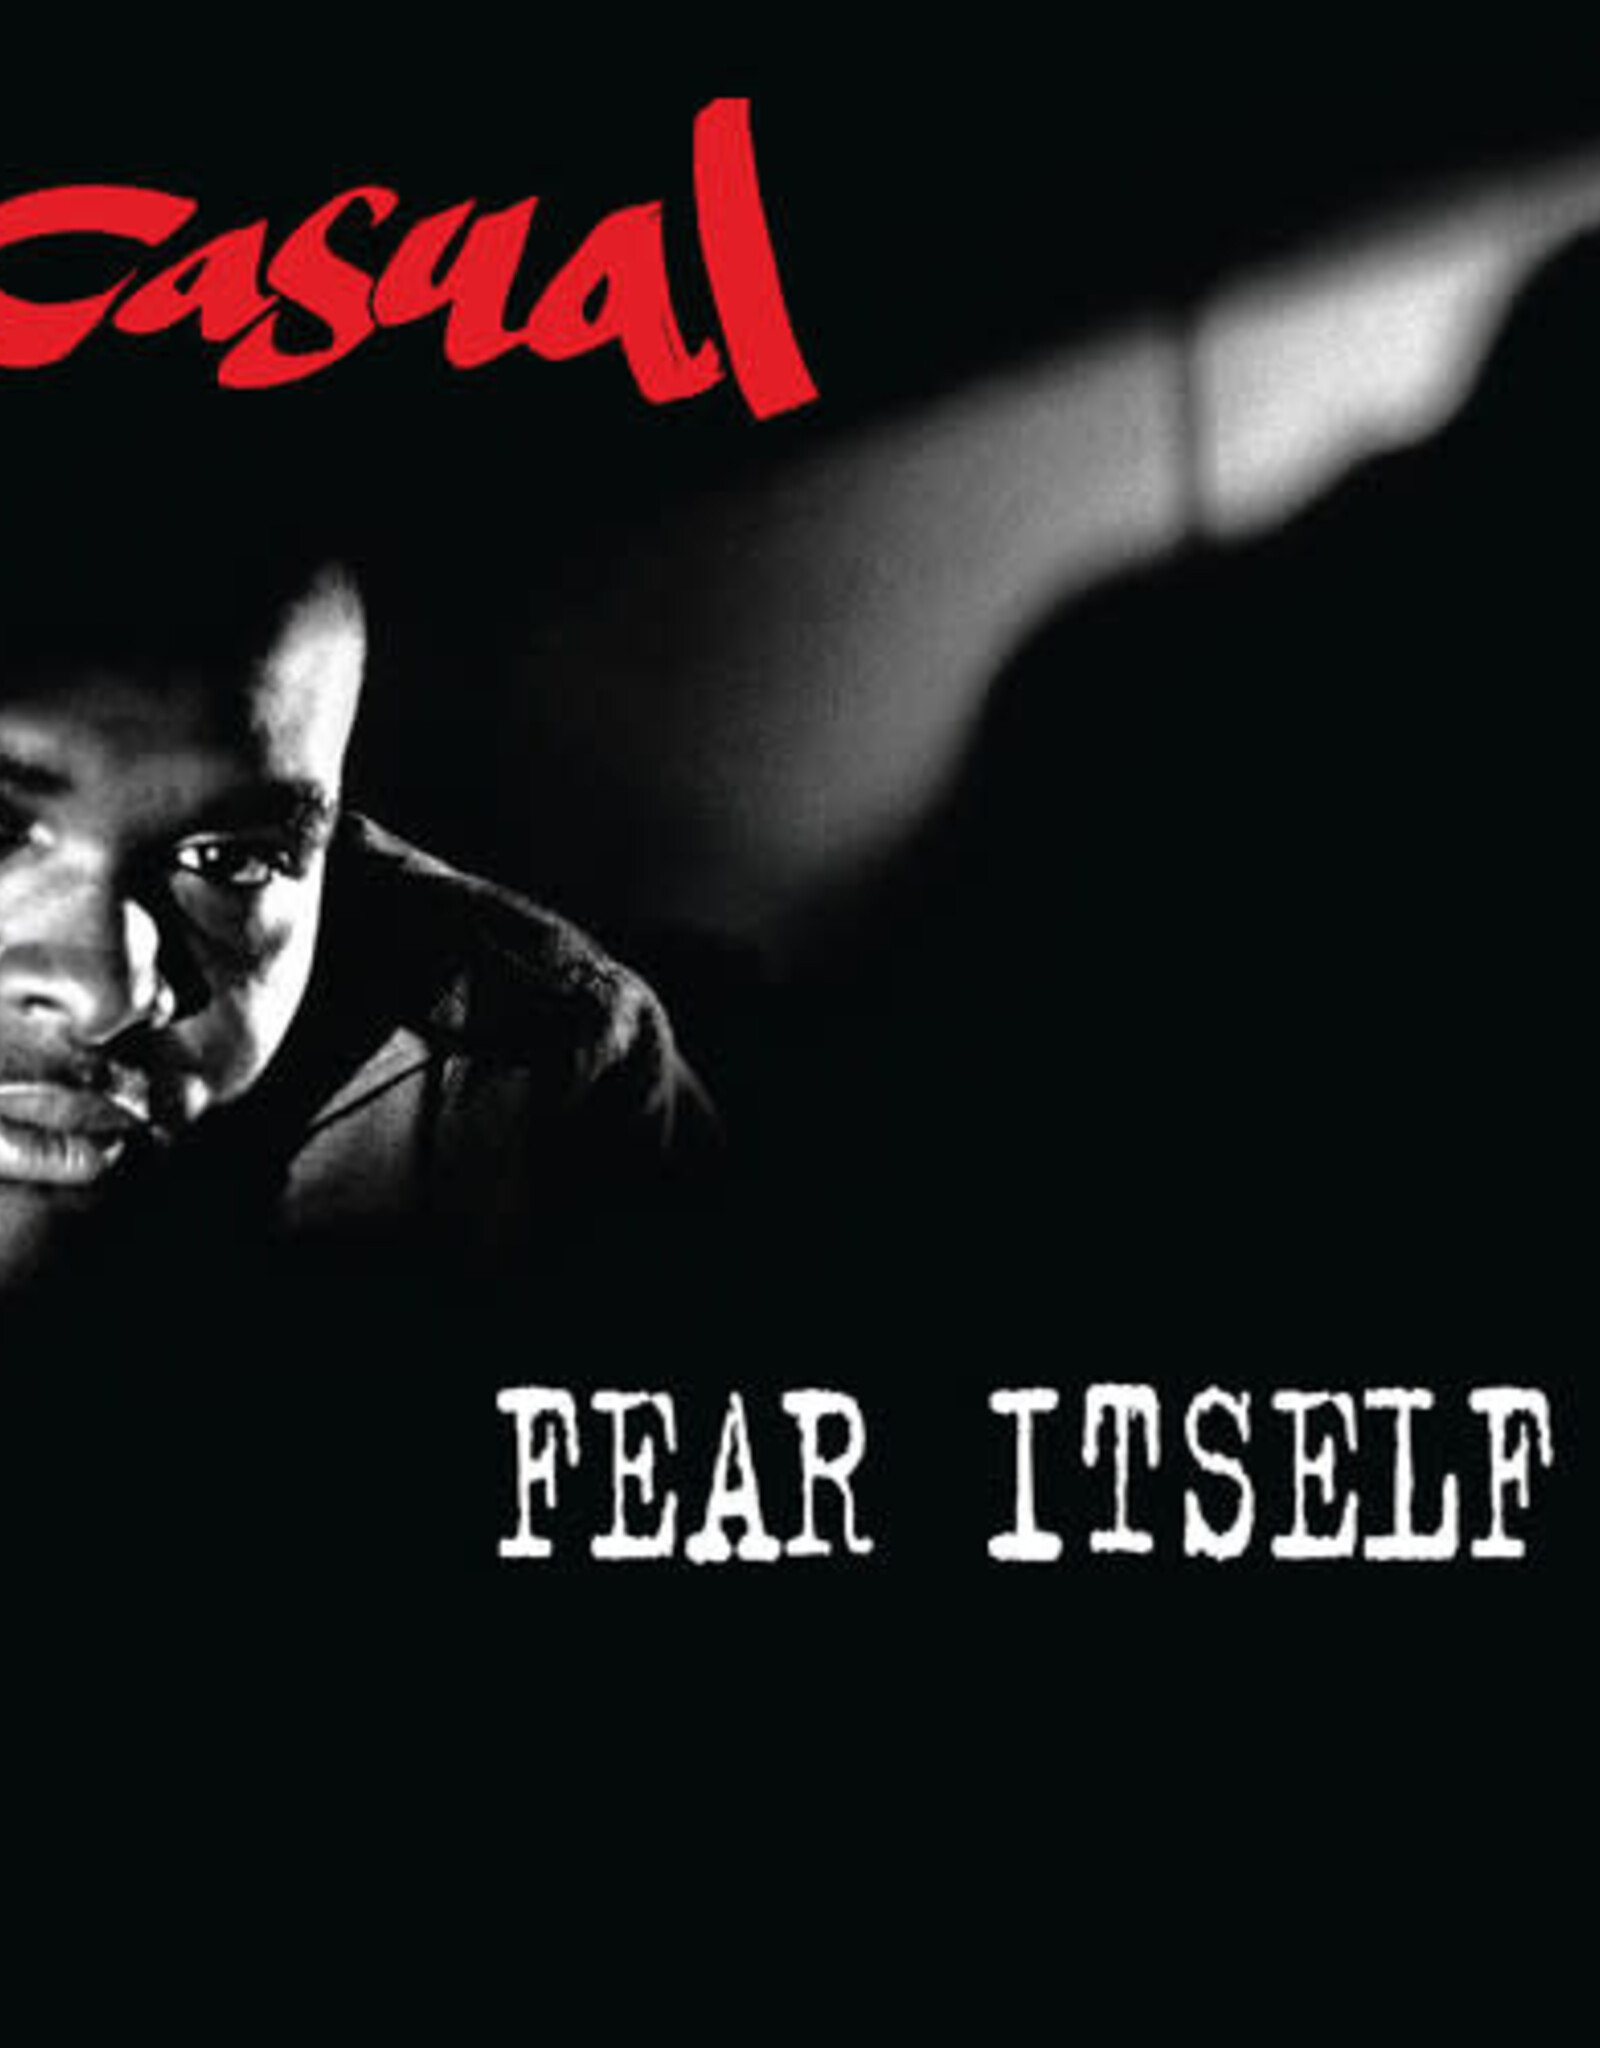 Casual	- Fear Itself	(RSD 2024)